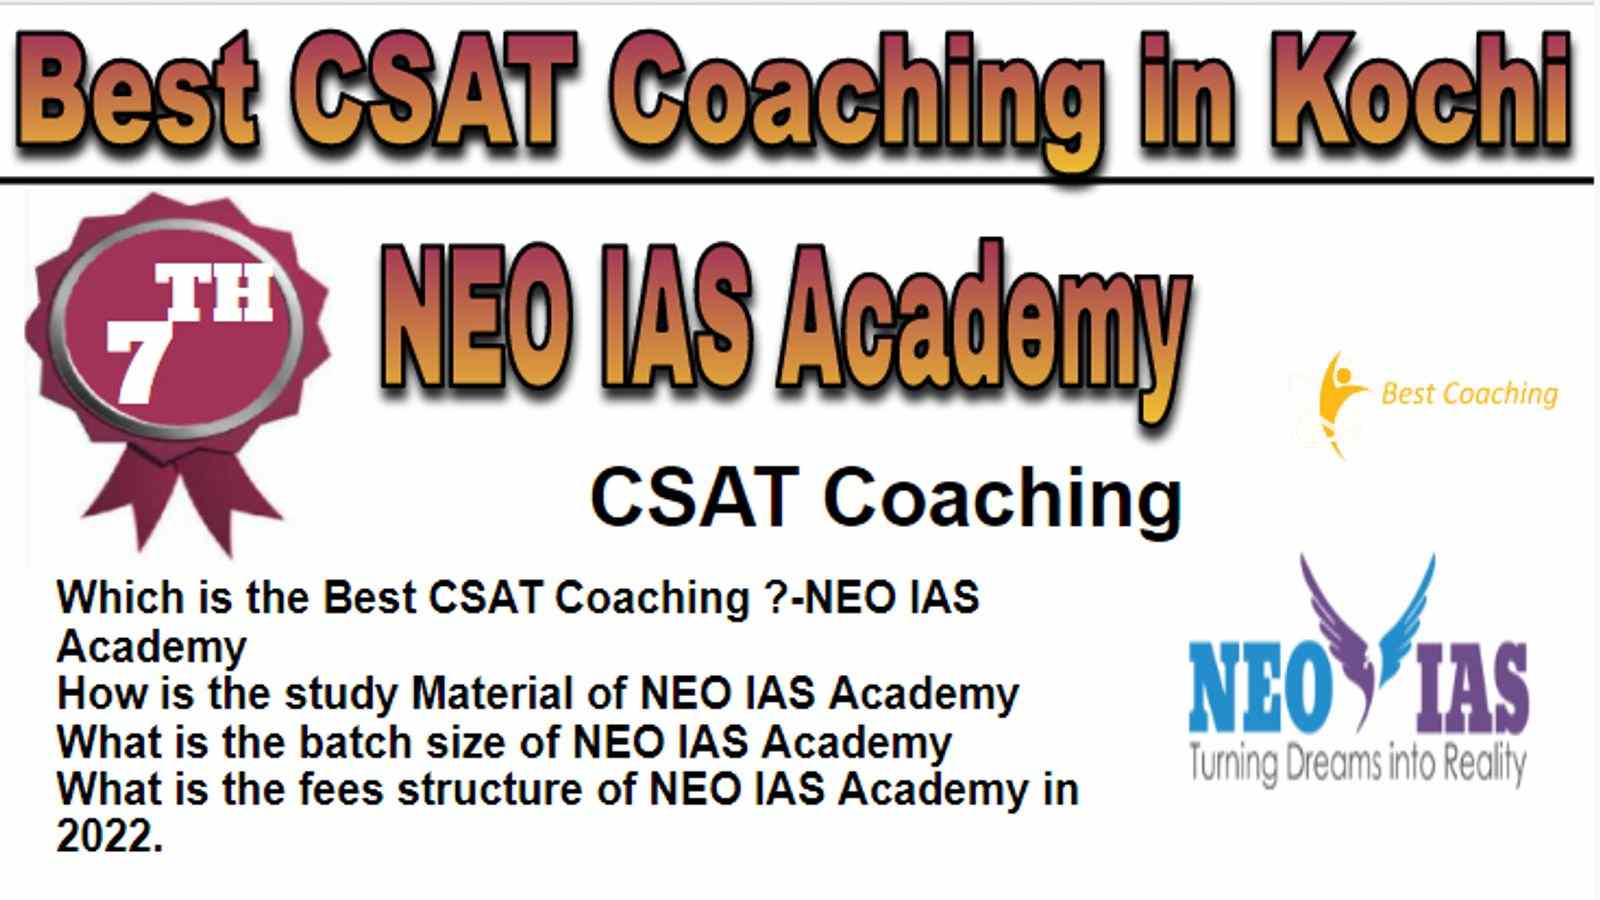 Rank 7 Best CSAT Coaching in Kochi